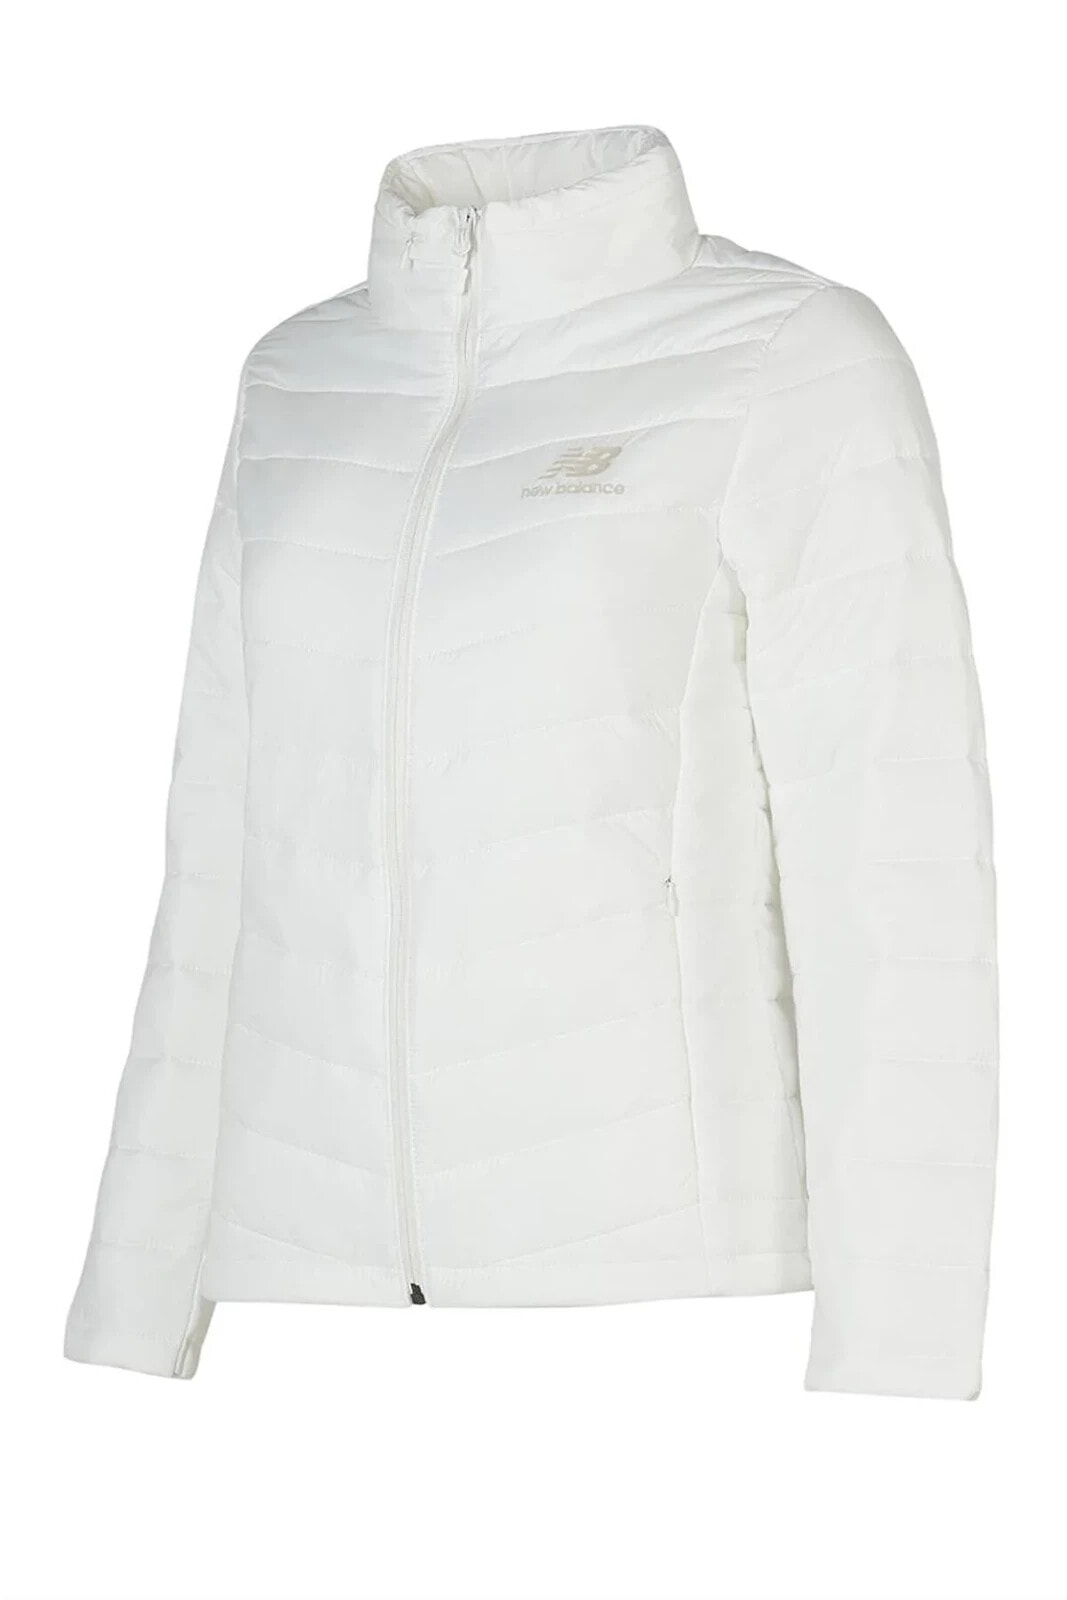 Lifestyle Women Jacket Kadın Beyaz Mont Wnj3385-wt